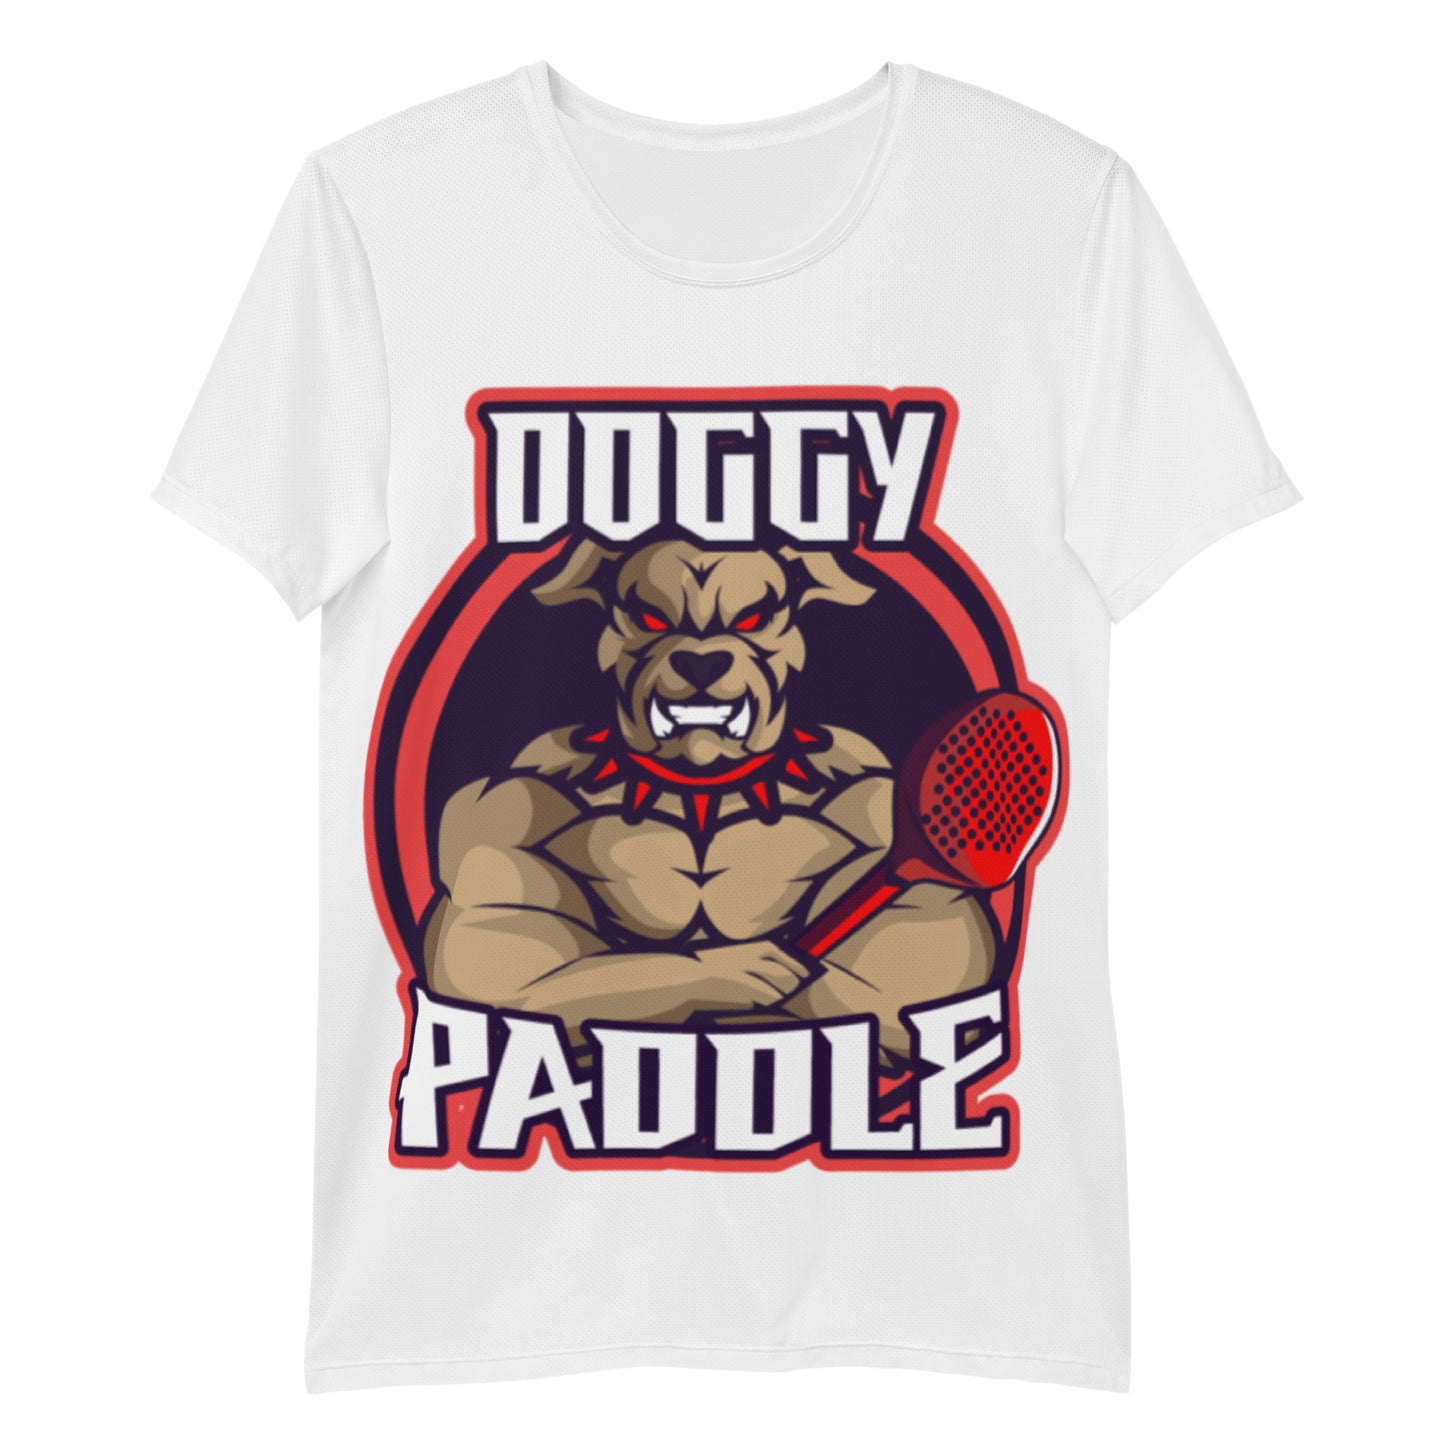 Doggy Paddle Men's Athletic T-shirt